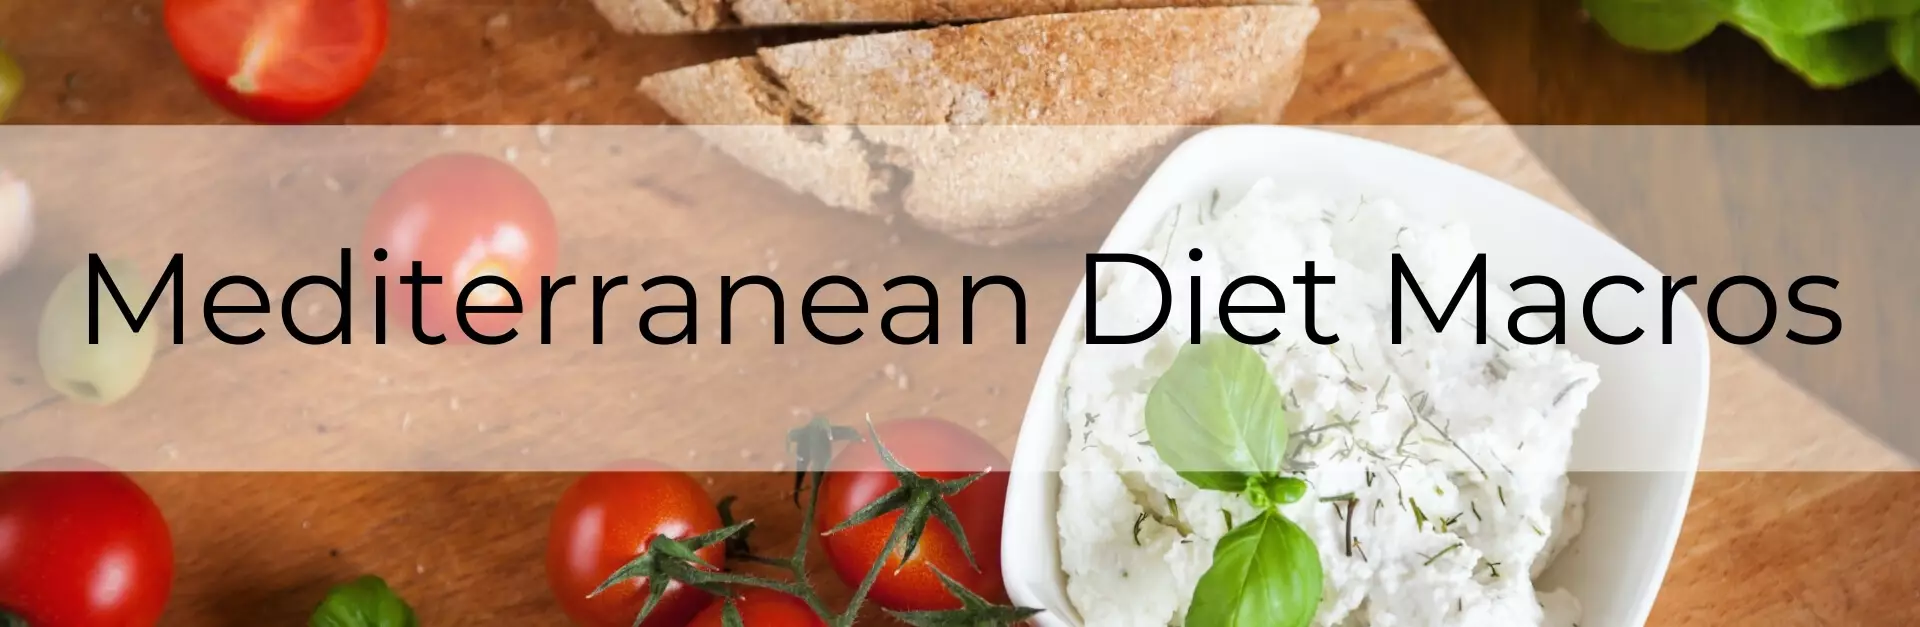 mediterranean diet macros main-post-image